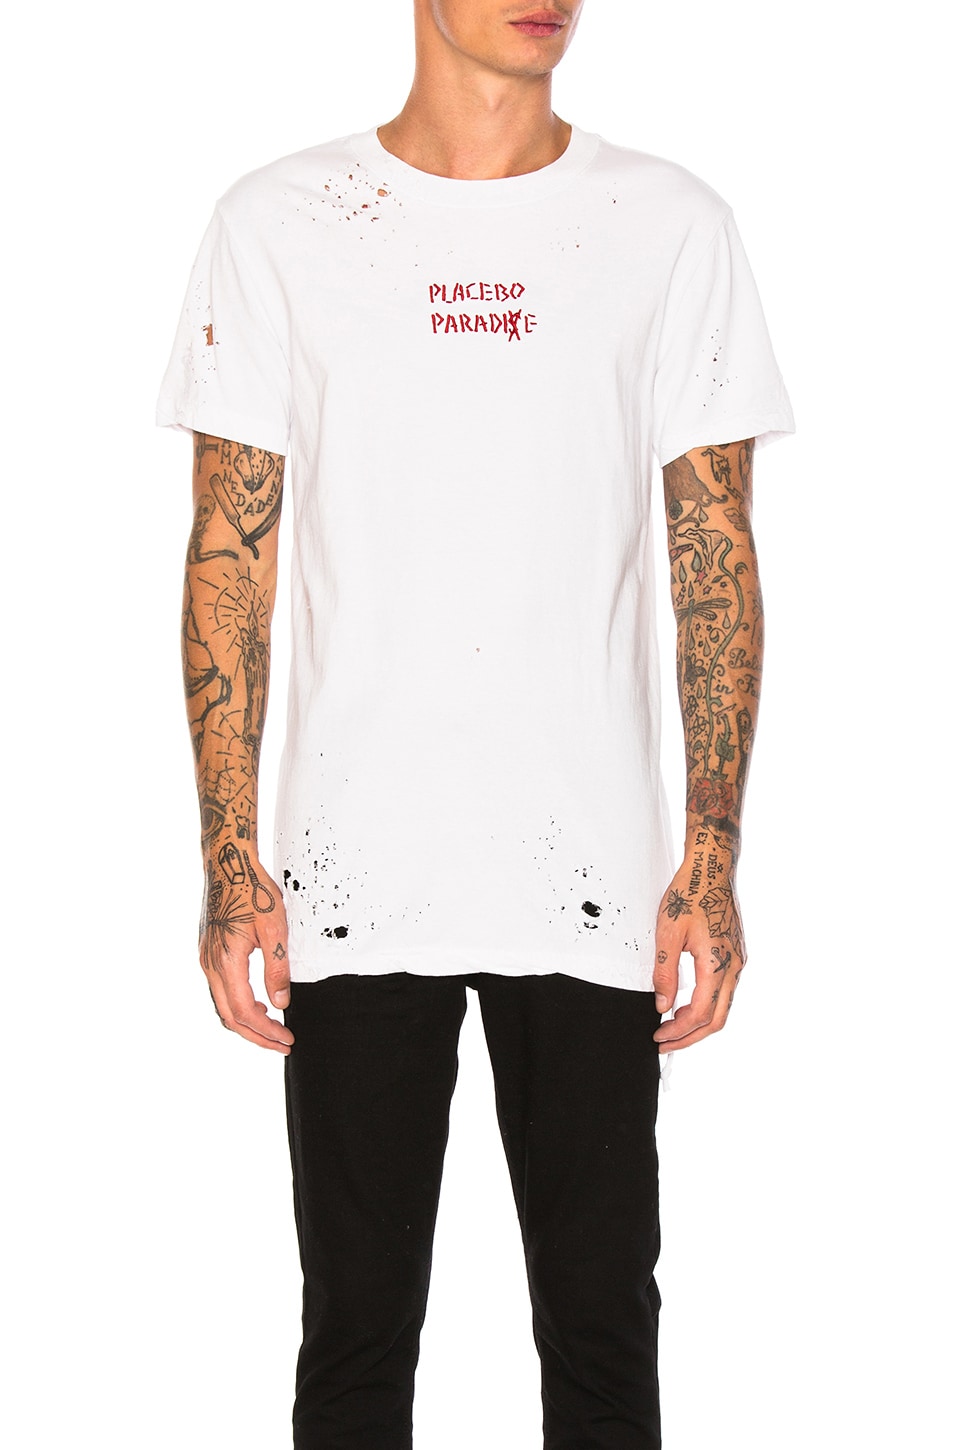 Футболка Placebo. Ksubi одежда. Reach brand футболка. Ksubi рубашка. T shirts shop